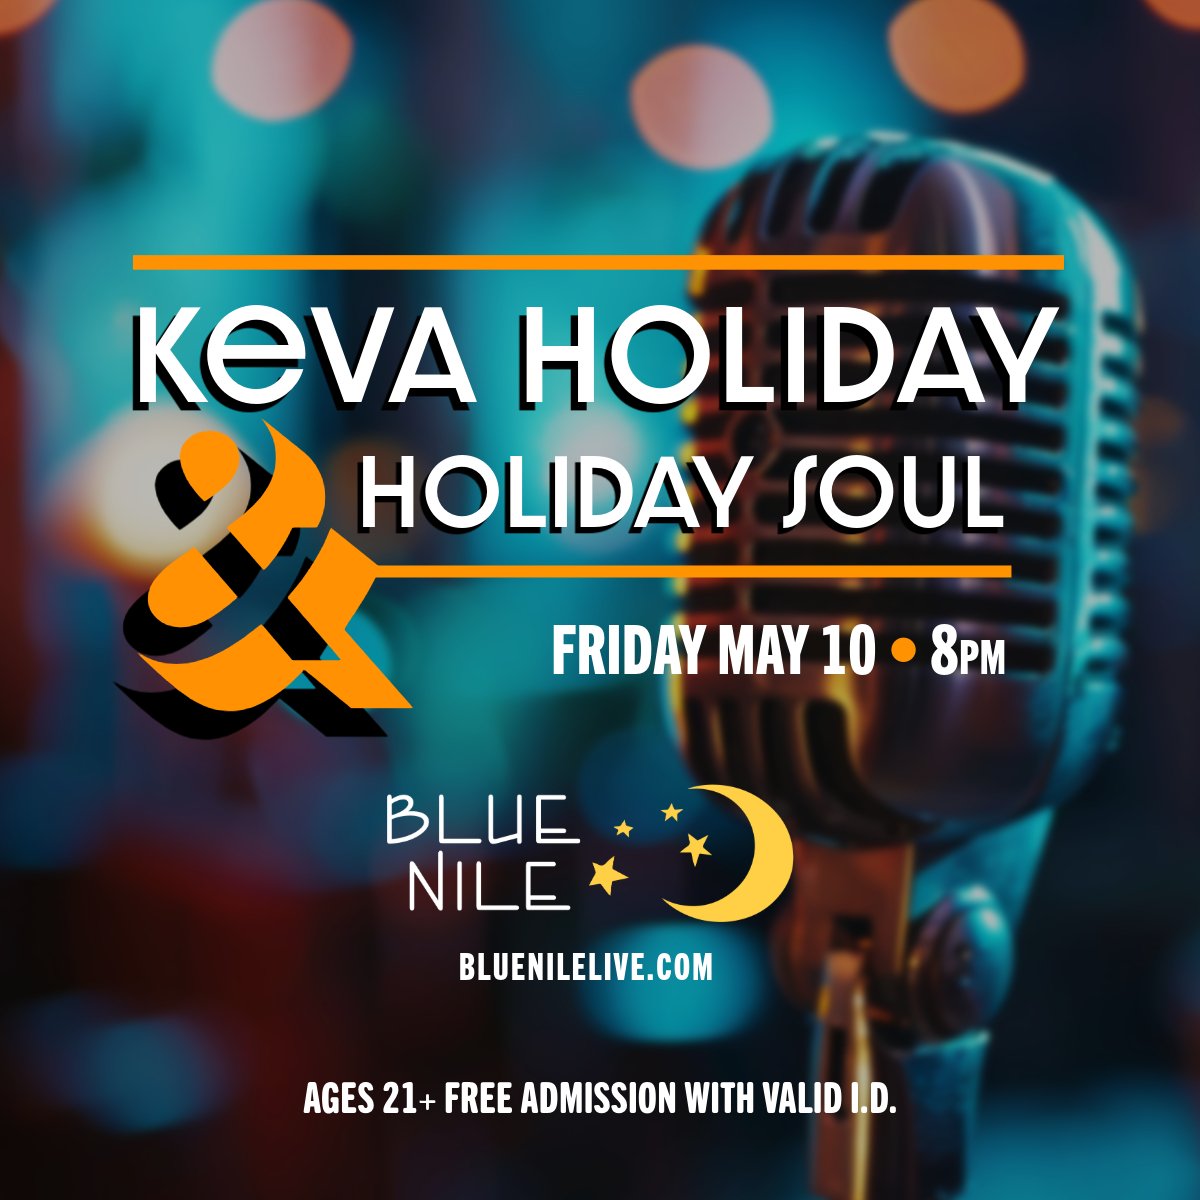 Join us Friday night for the beautiful Keva Holiday and Holiday Soul!
✨🌙
Ages 21+ FREE ADMISSION with Valid I.D.

#kevaholiday #holidaysoul #livemusicnola #frenchmenstreetmusic #bluenilenola @keva_holiday_smg3